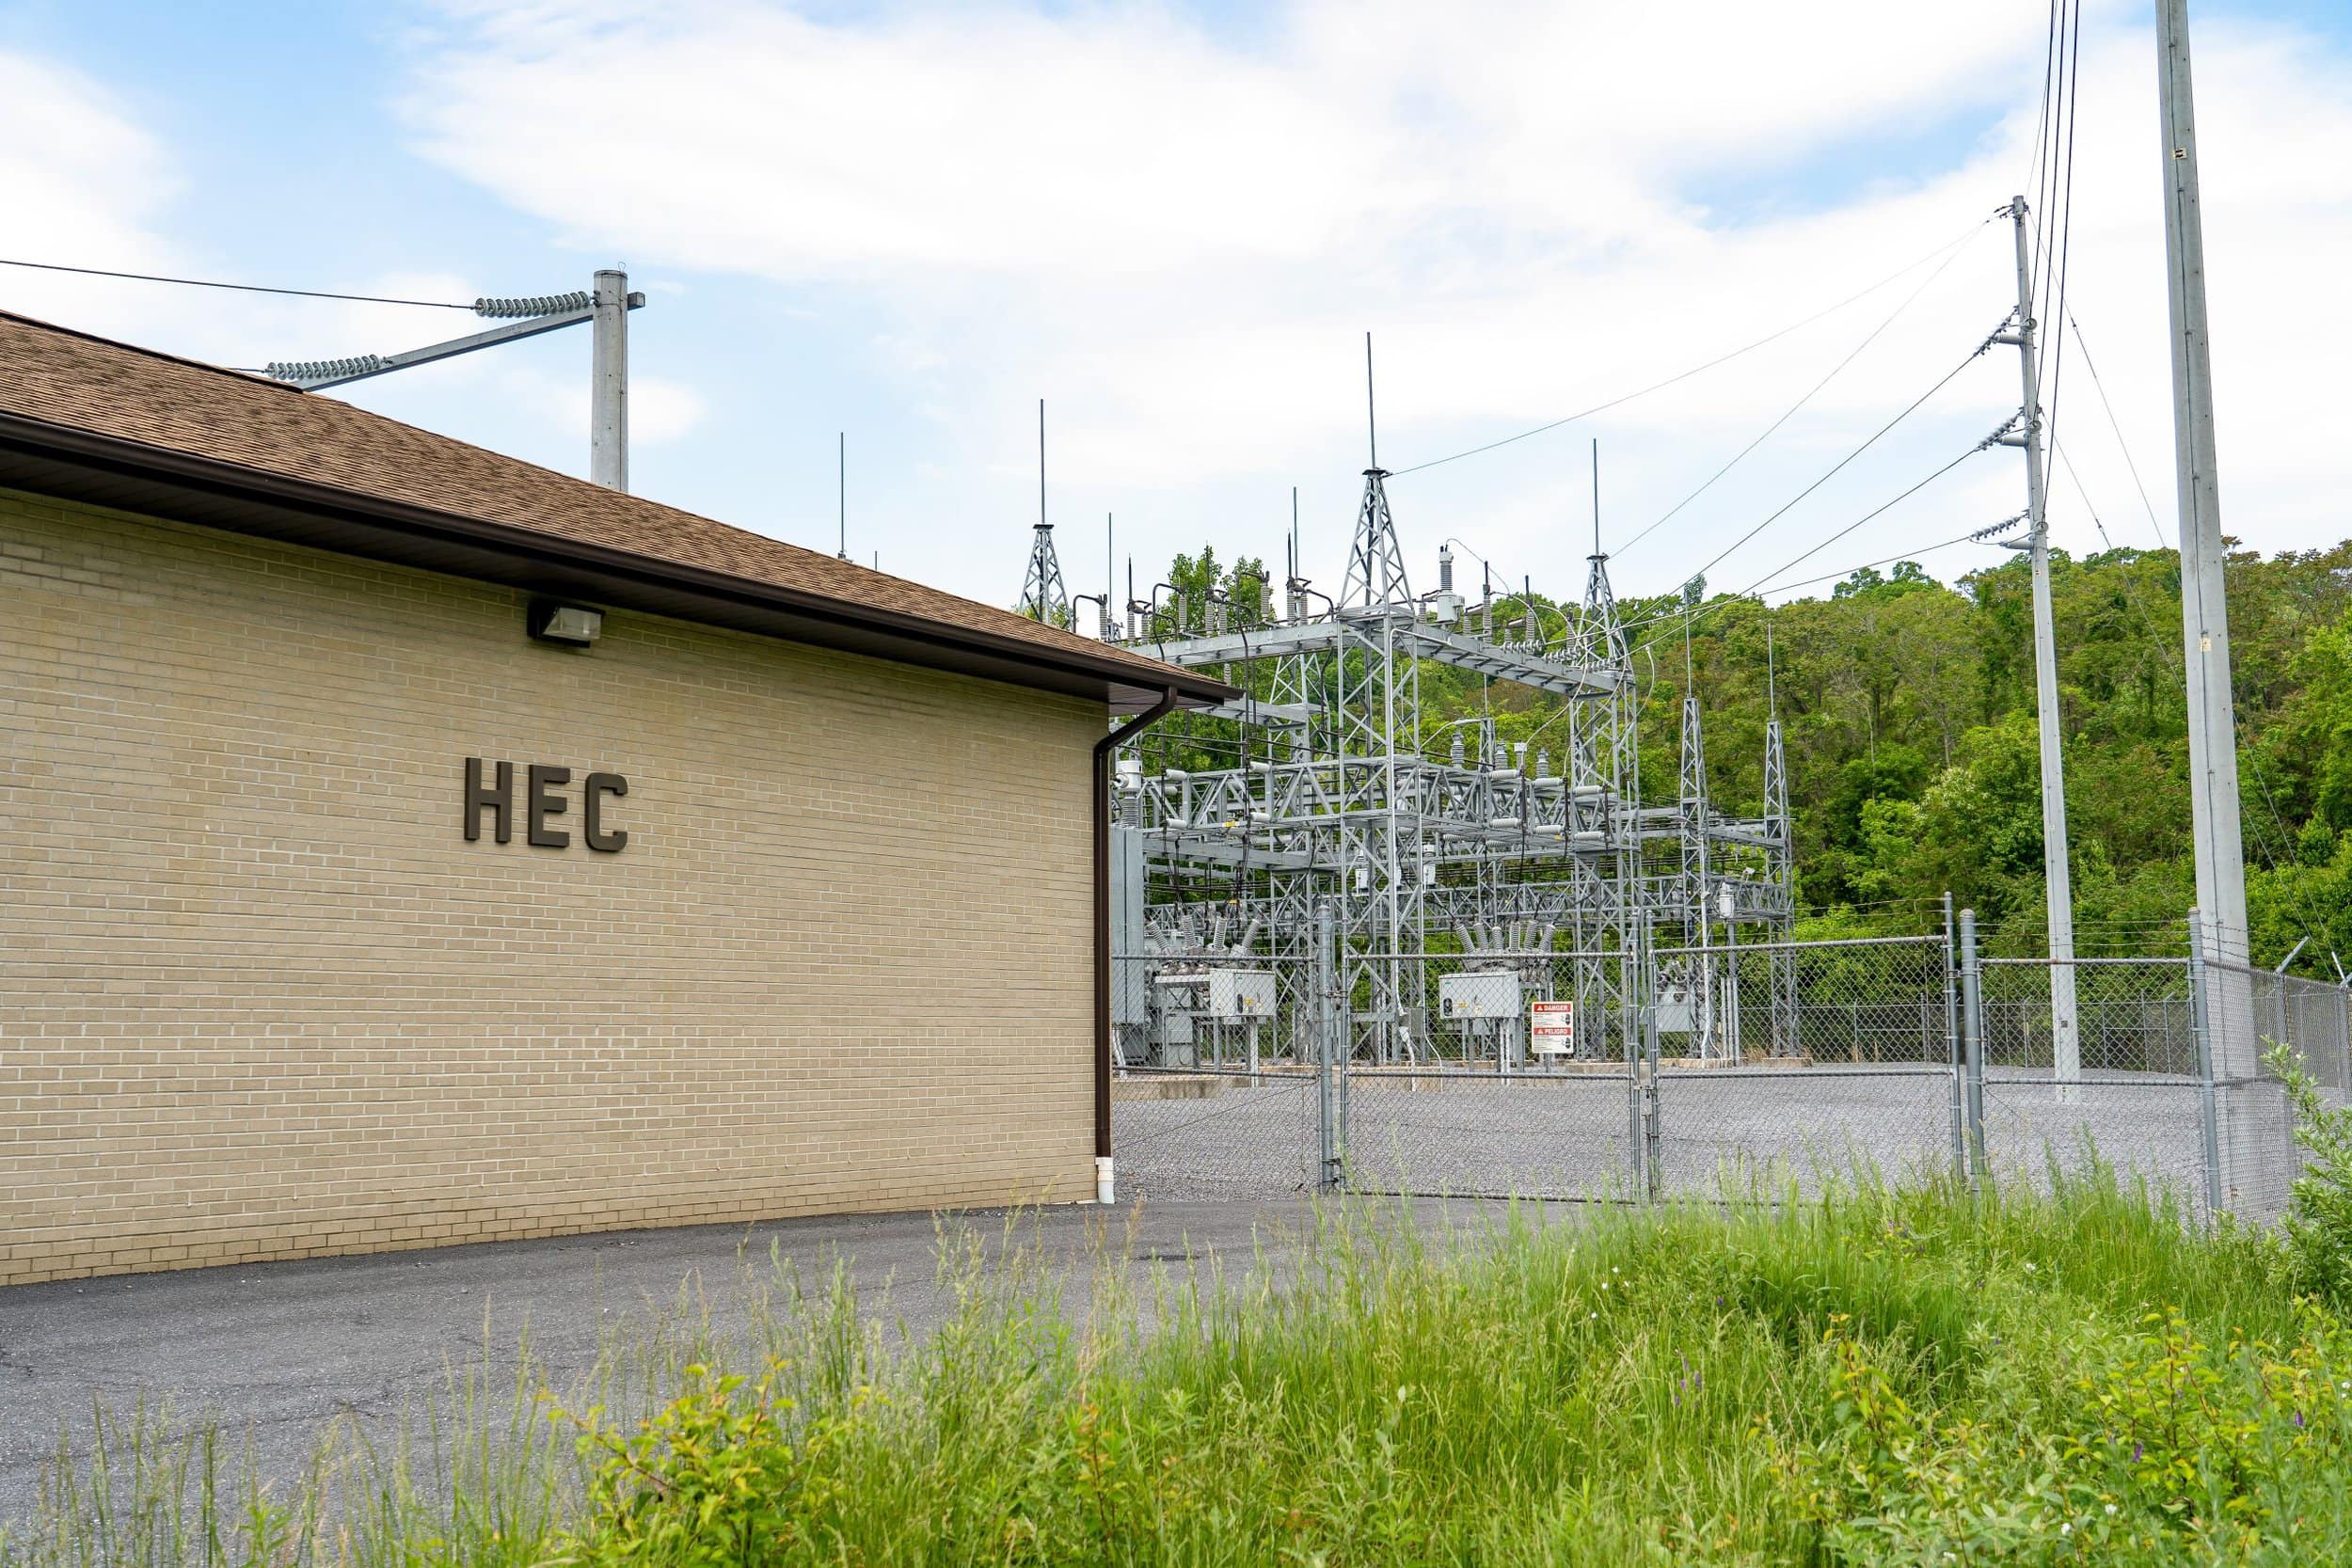 HEC Harrisonburg Electric Commission sub station